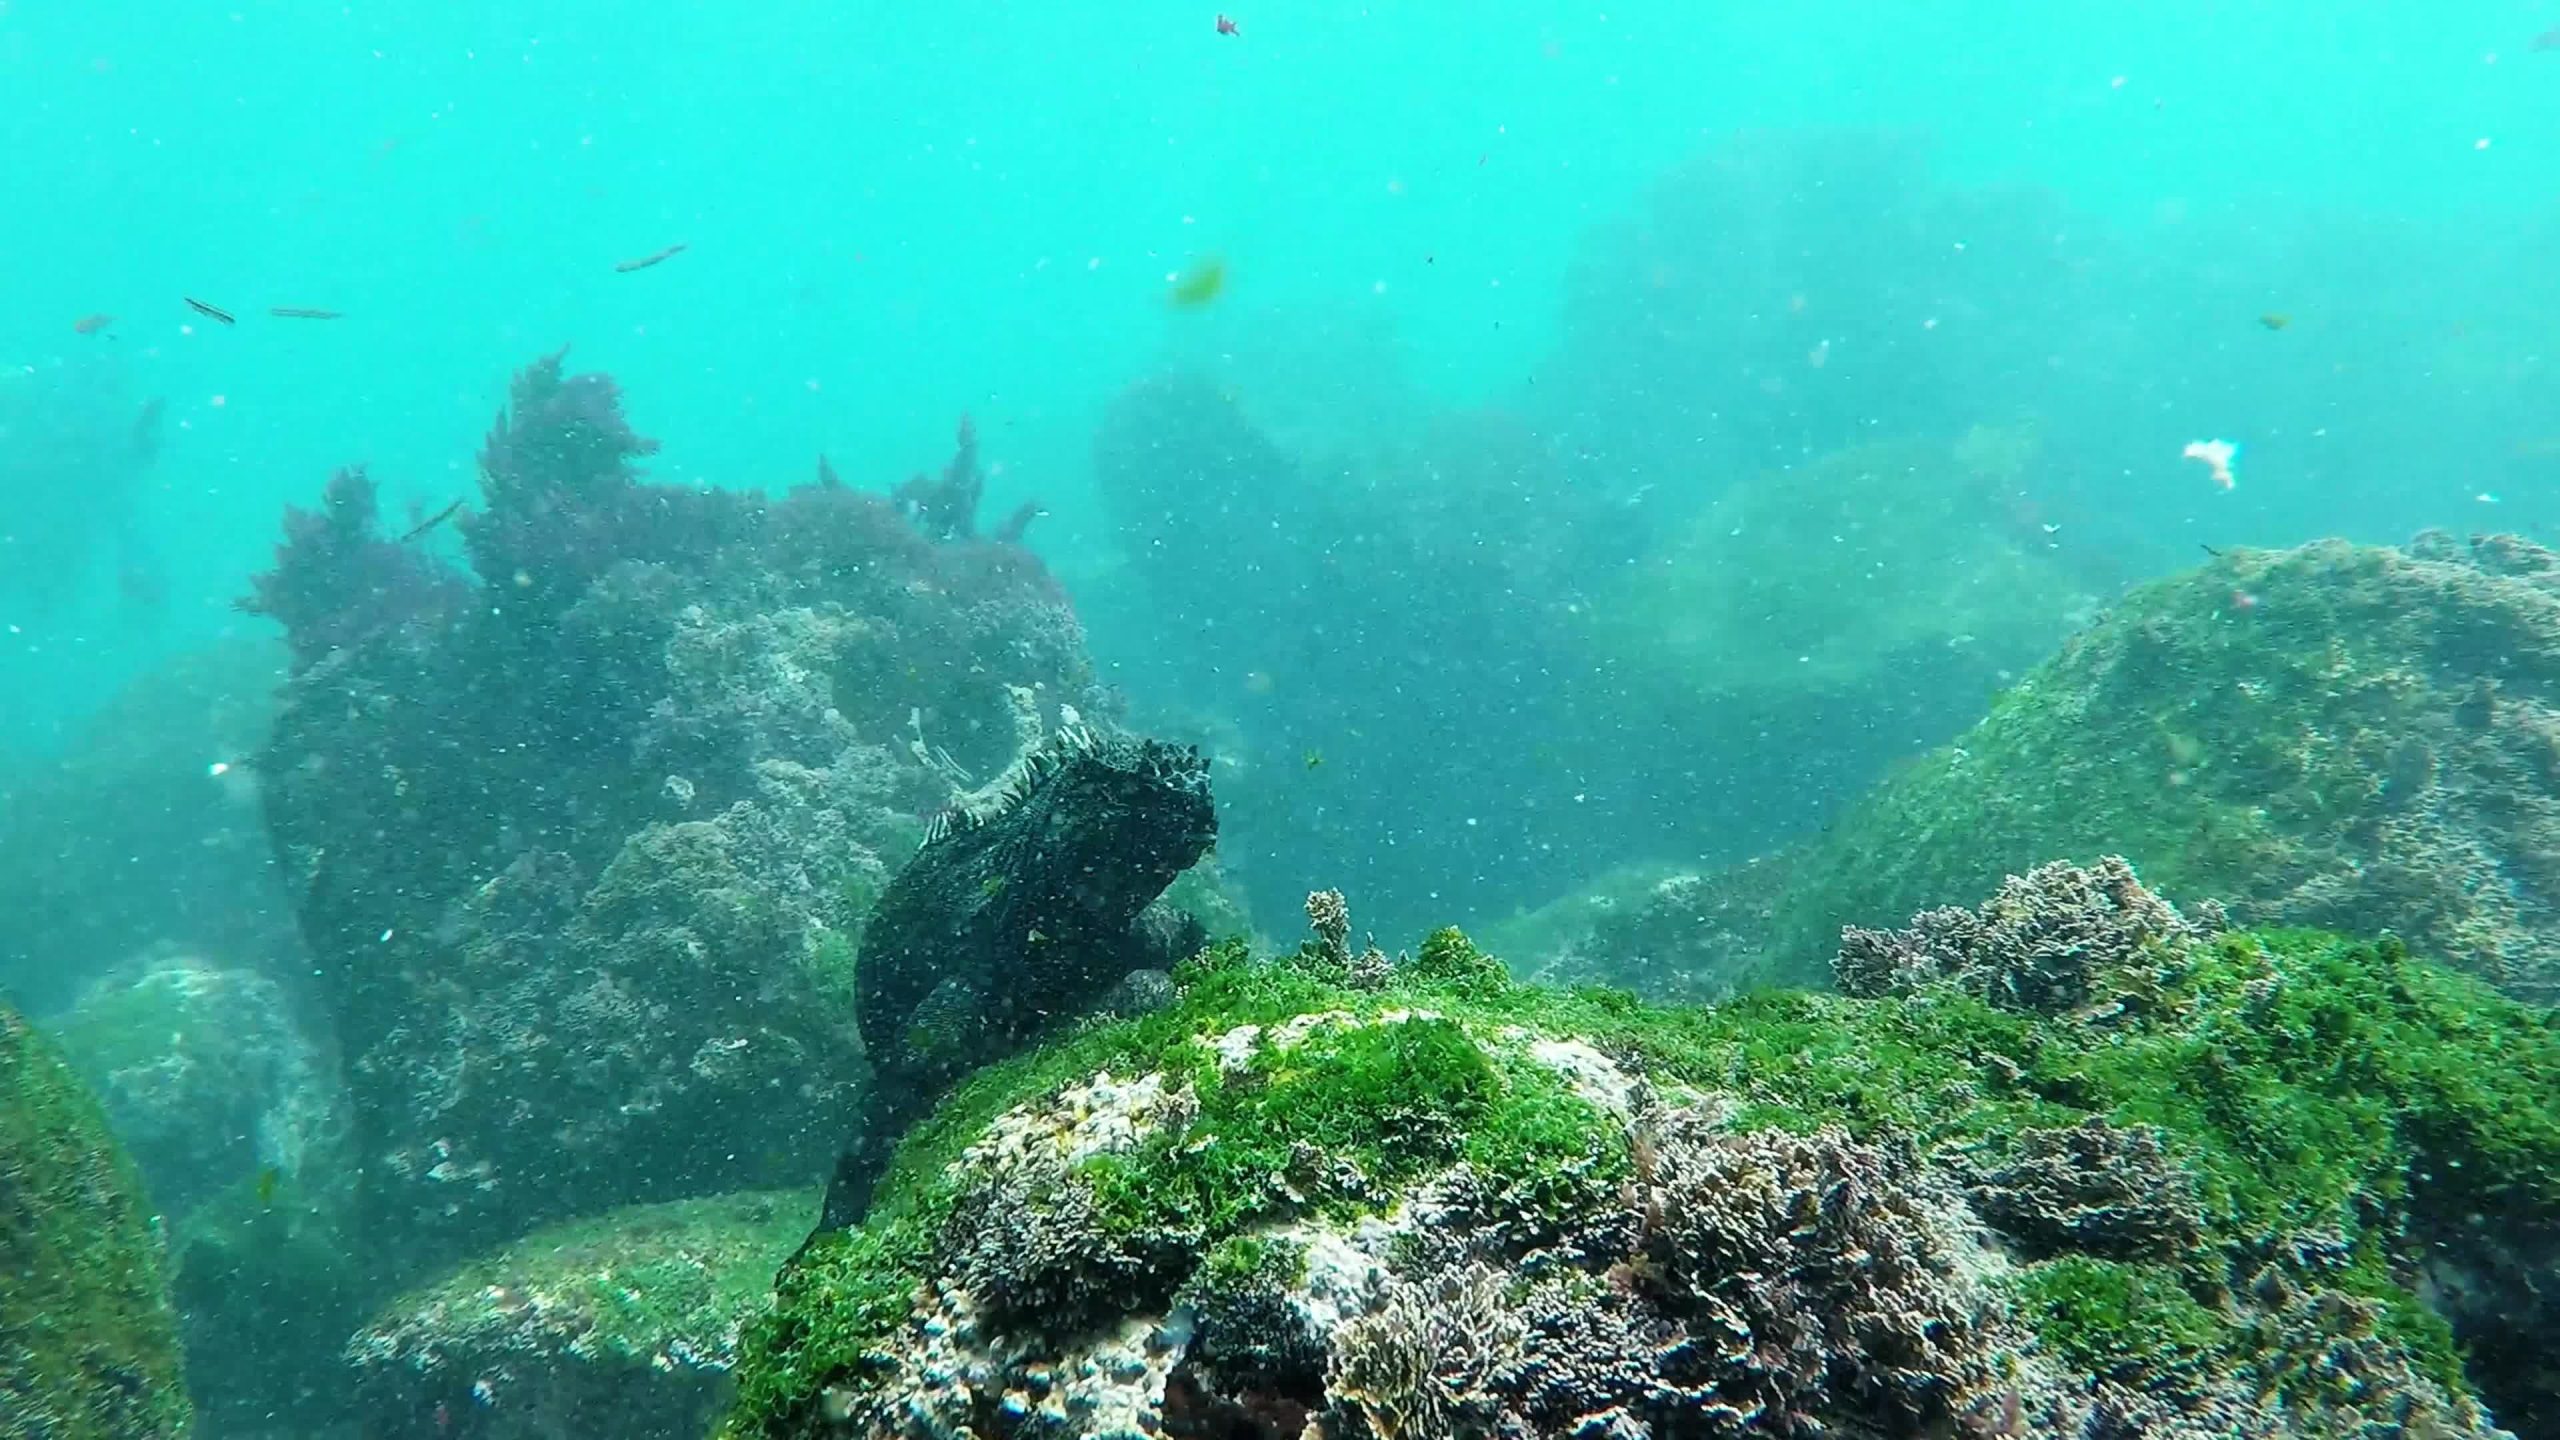 Iσως να μην γνώριζες την ύπαρξή του έως τώρα: Μοιάζει με προϊστορικό ζώο & βρίσκεται μόνο στα Νησιά Γκαλαπάγκος (βίντεο)